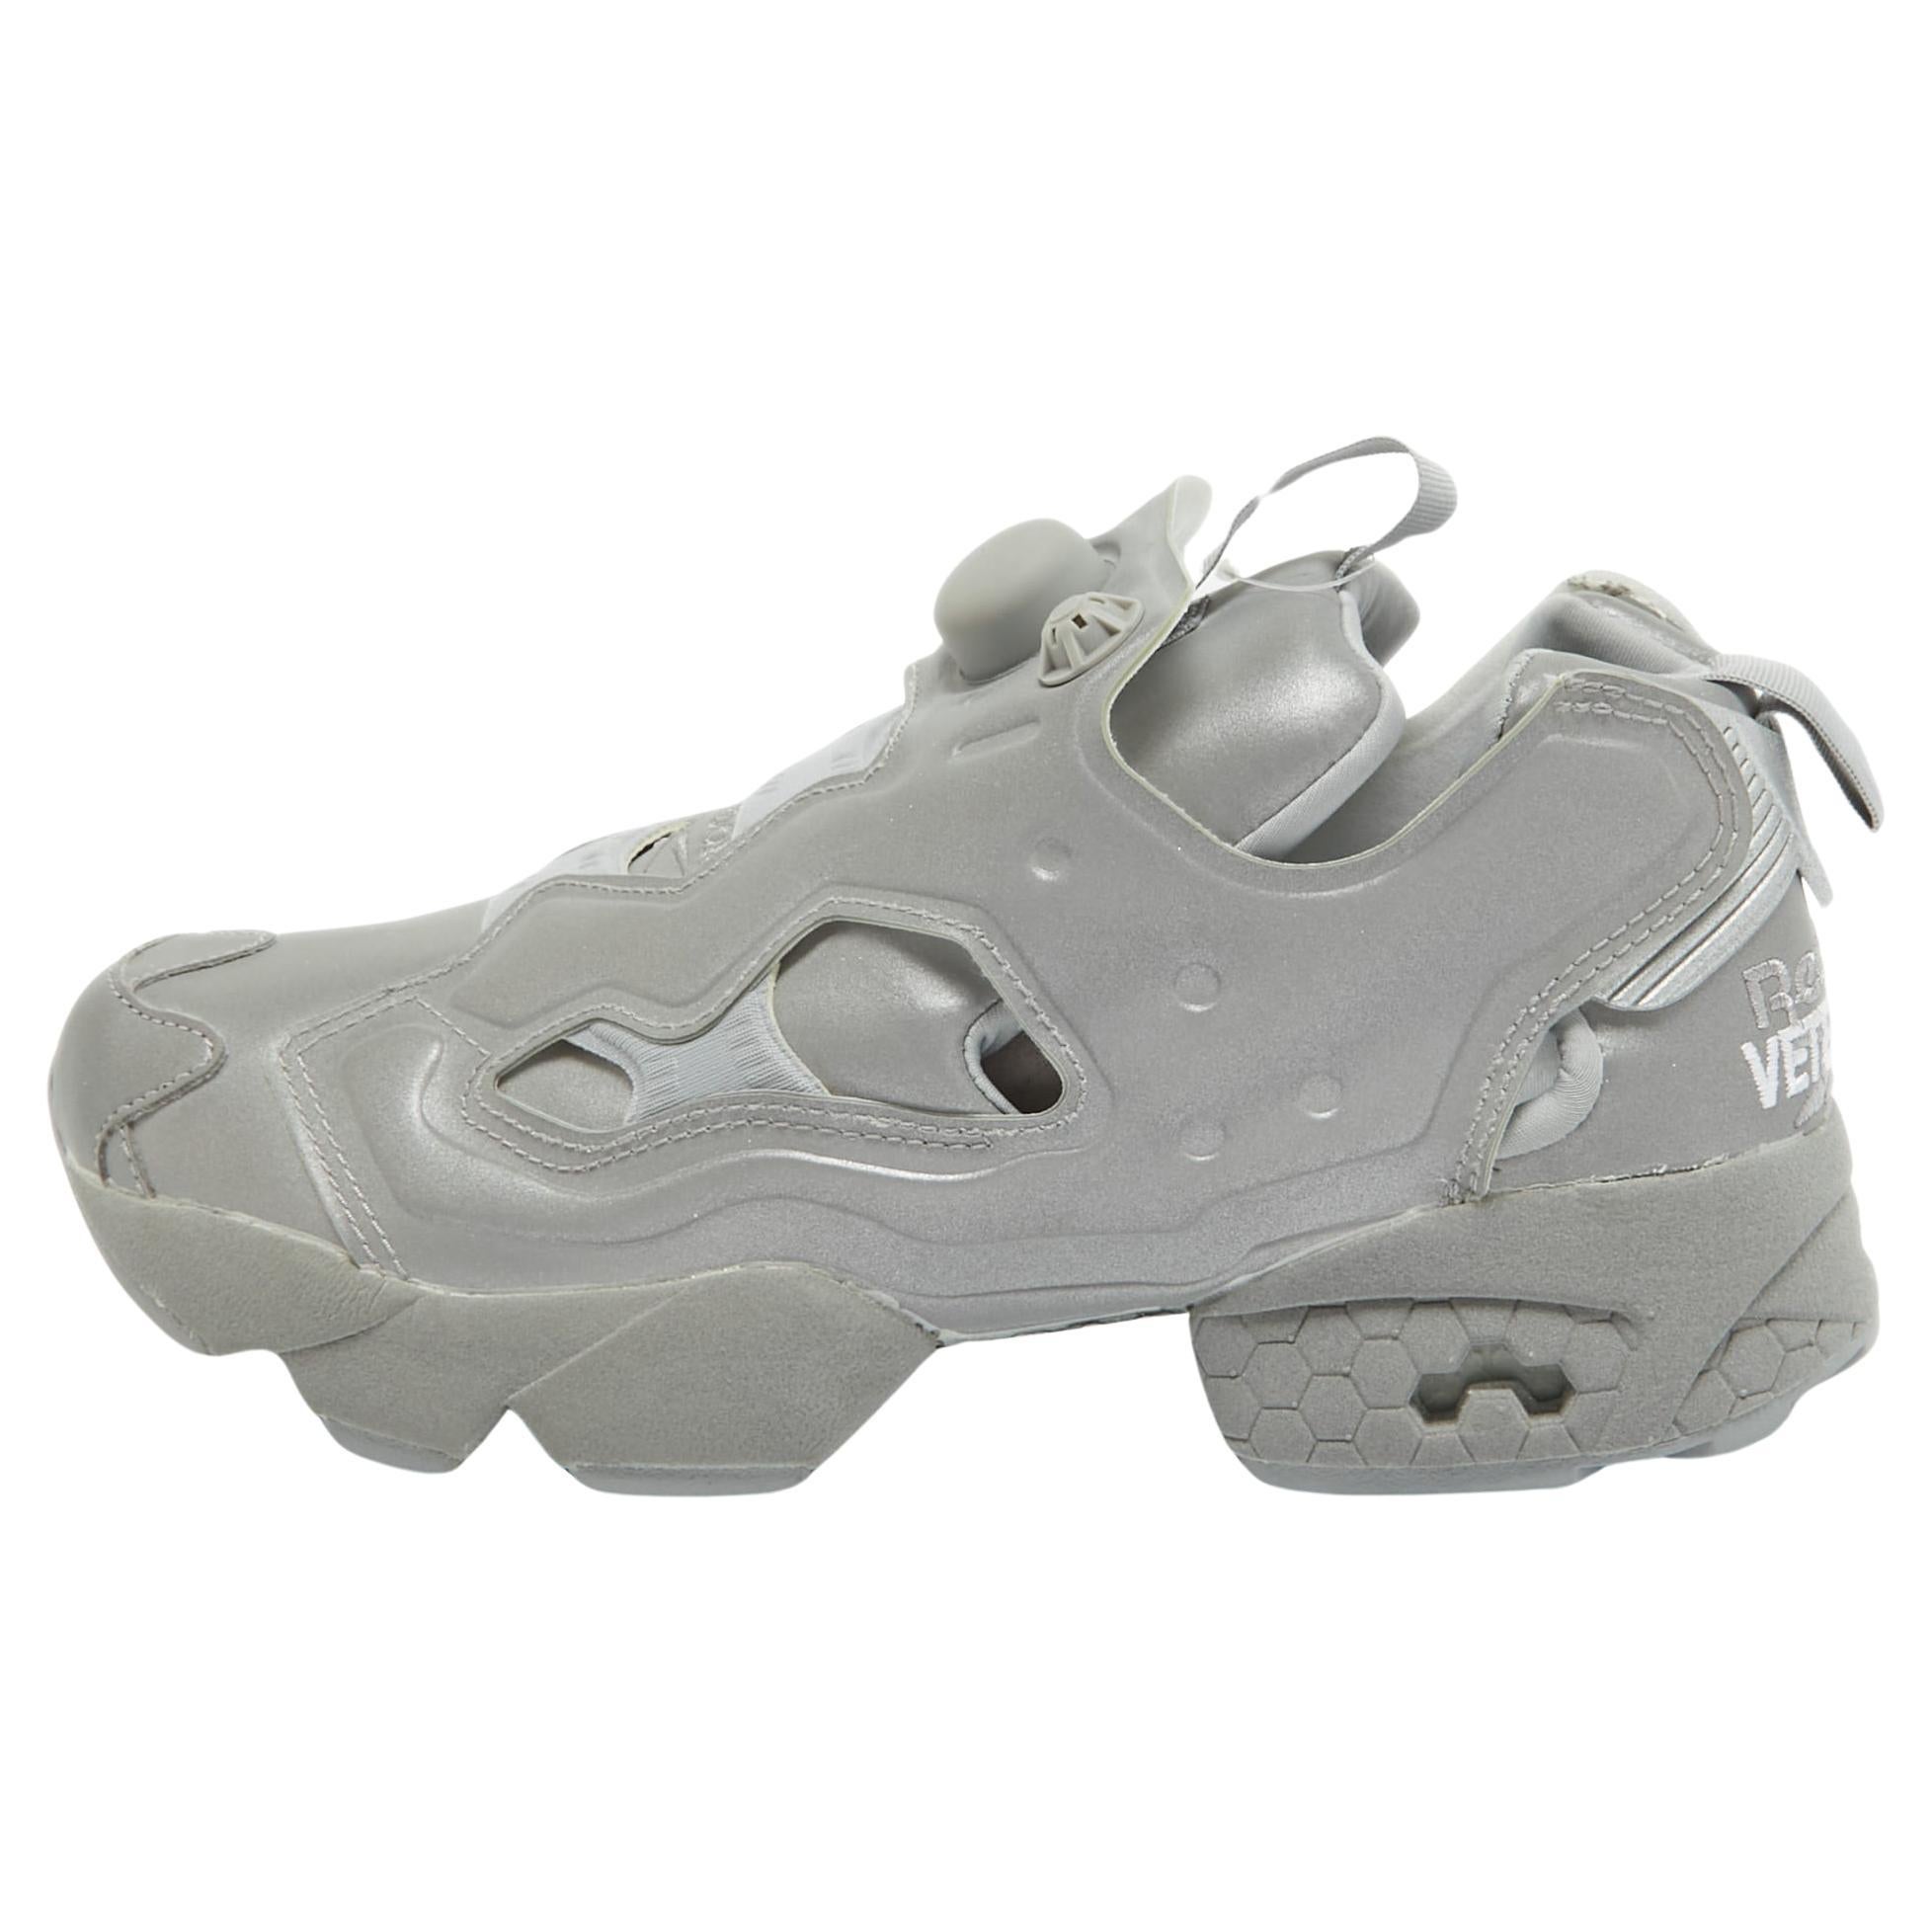 Vetements x Reebok Grey Reflective Fabric Instapump Fury Sneakers Size 38.5